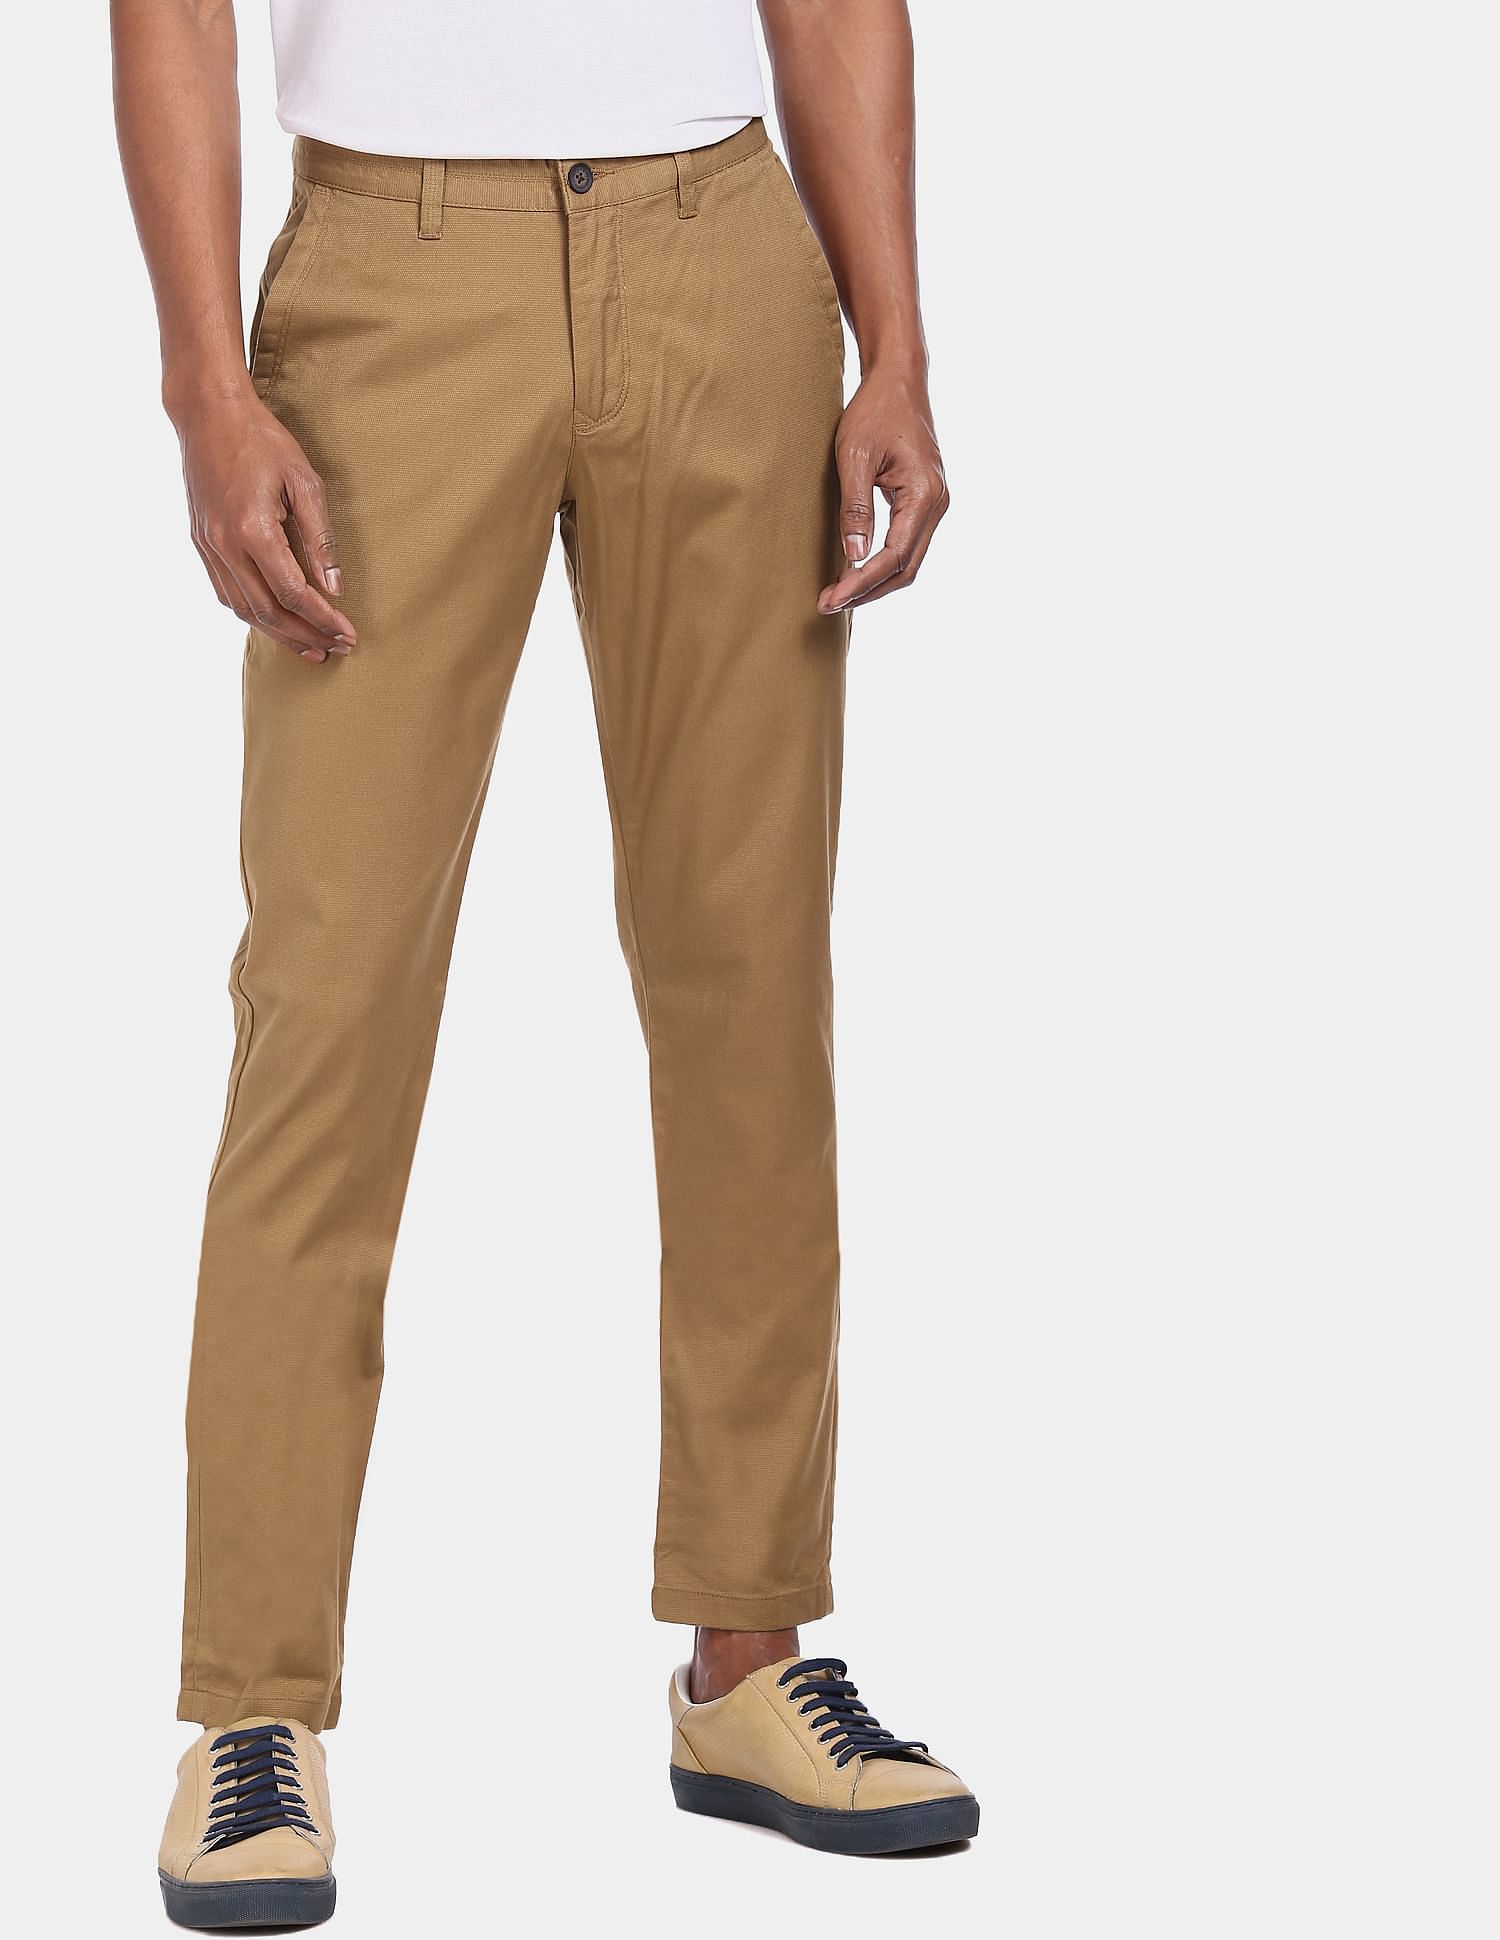 Buy Inspire Light Brown Slim Fit Formal Trouser for Men (28) at Amazon.in